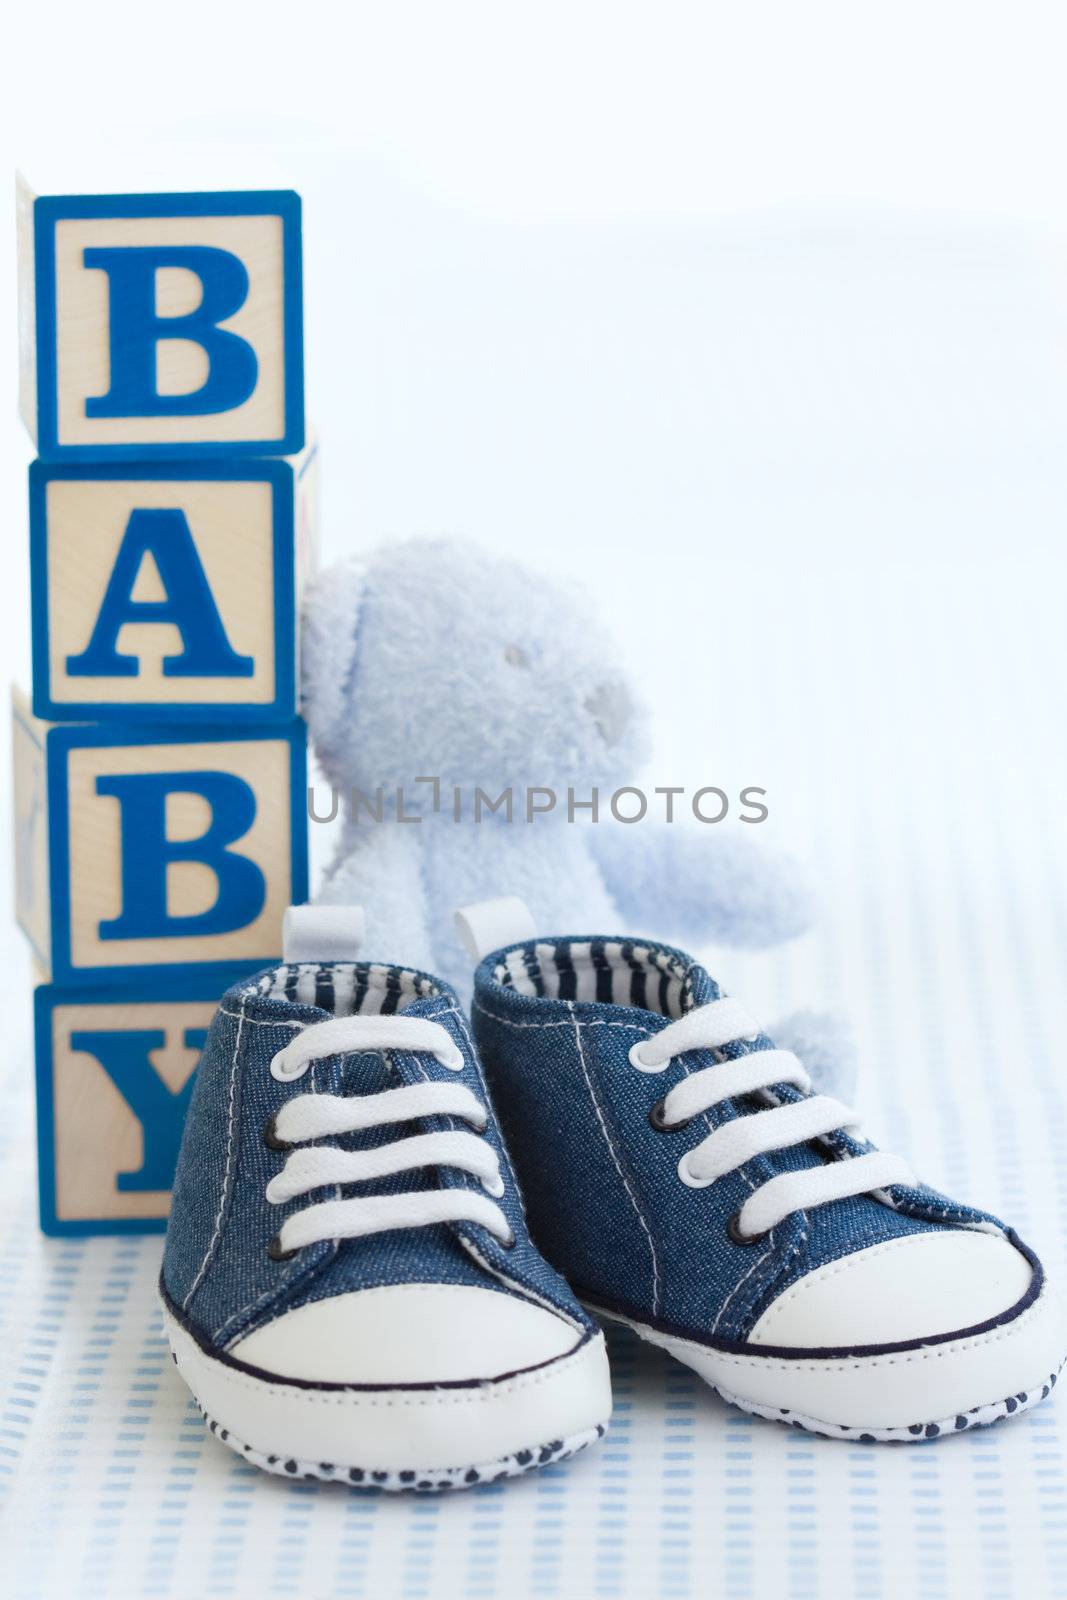 Blue denim baby shoes, baby blocks and teddy bear